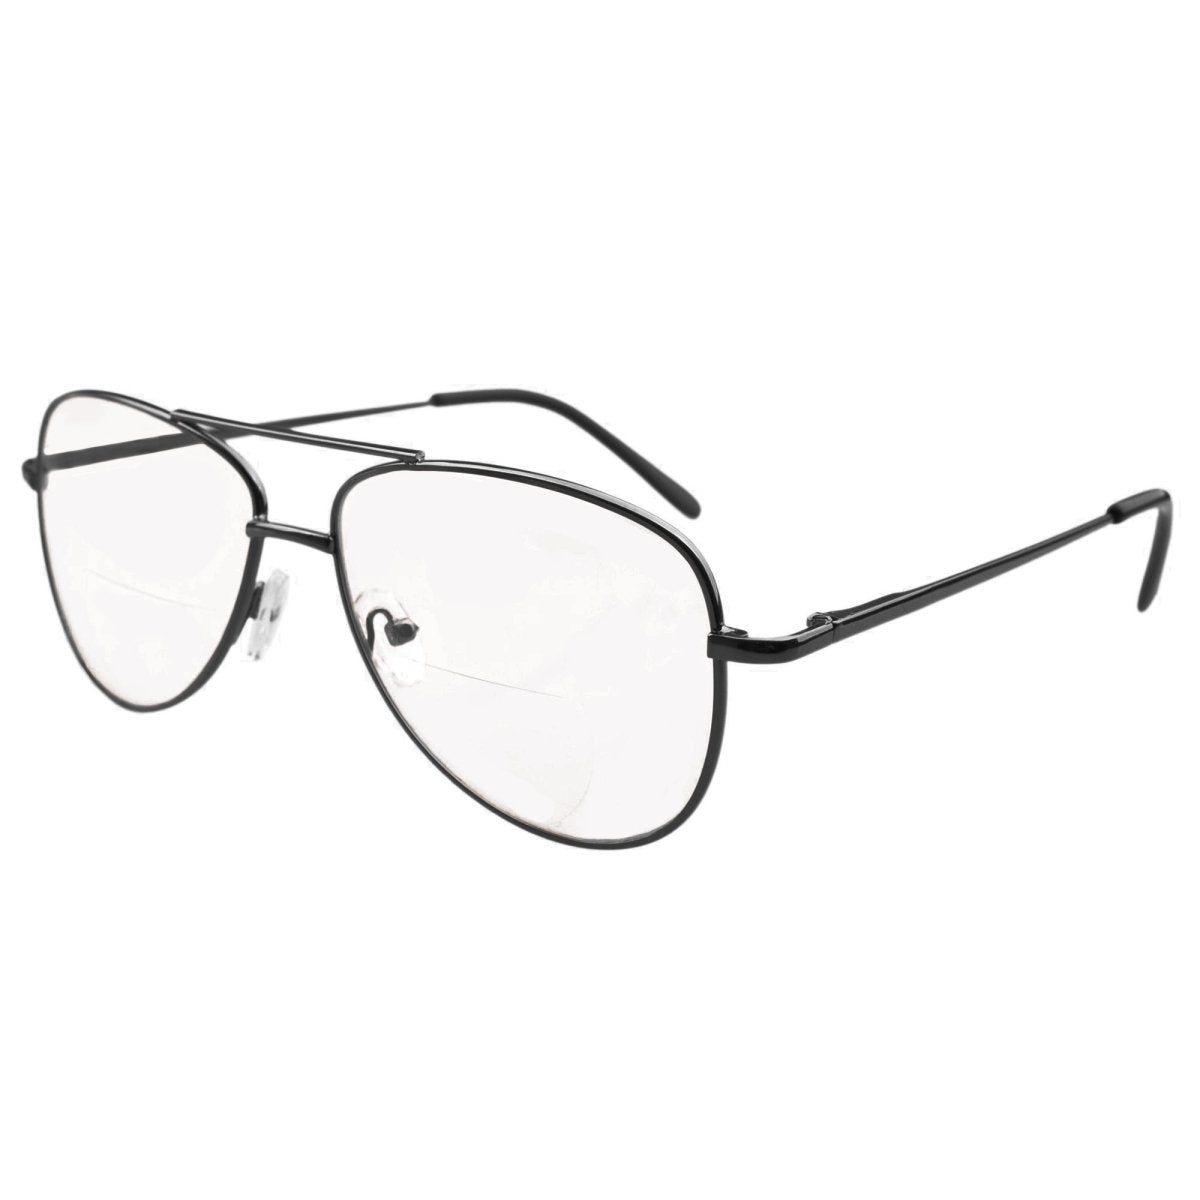 Polycarbonate Lens Pilot Bifocal Reading Glasses SG1502 - Clear +1.50